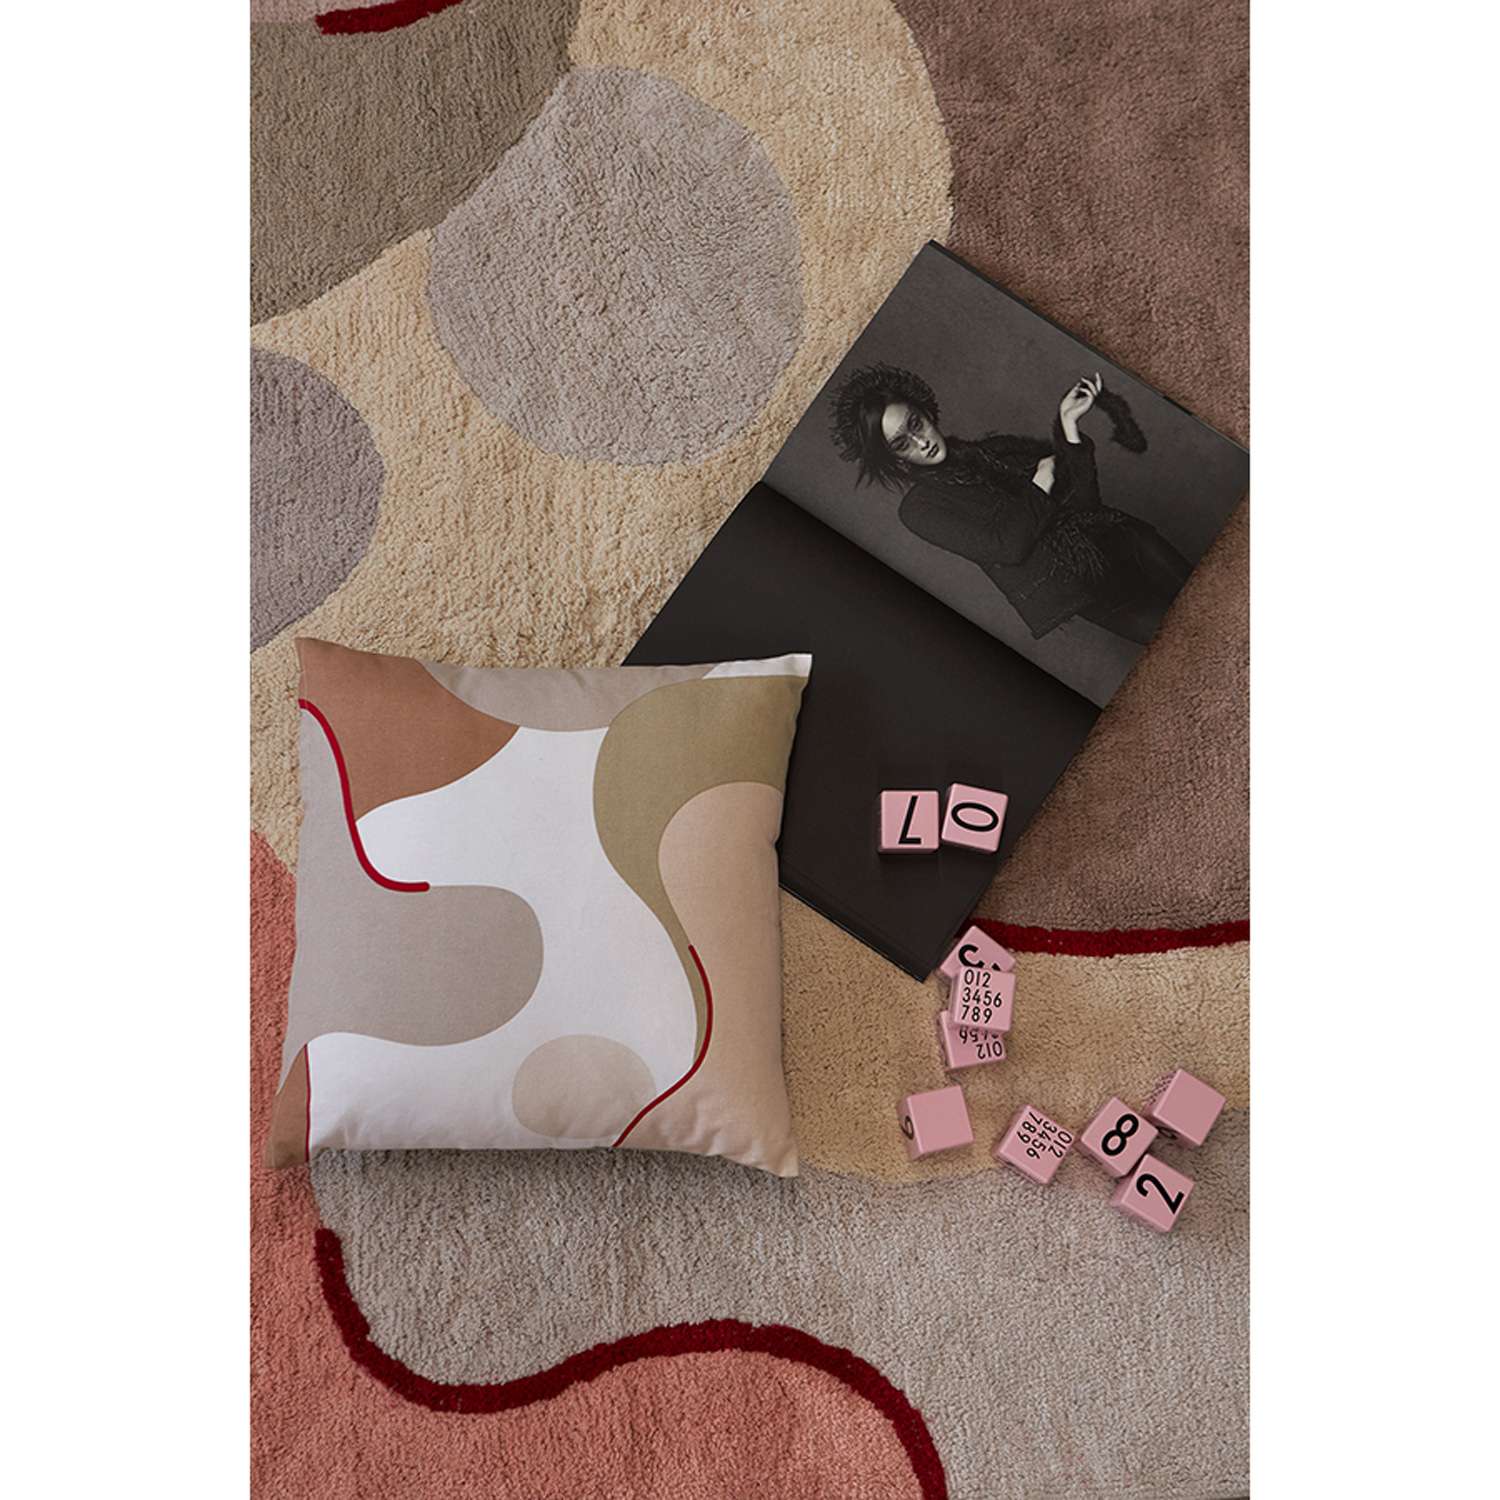 Подушка Tkano декоративная из хлопка бежевого цвета с авторским принтом 45х45 см - фото 2